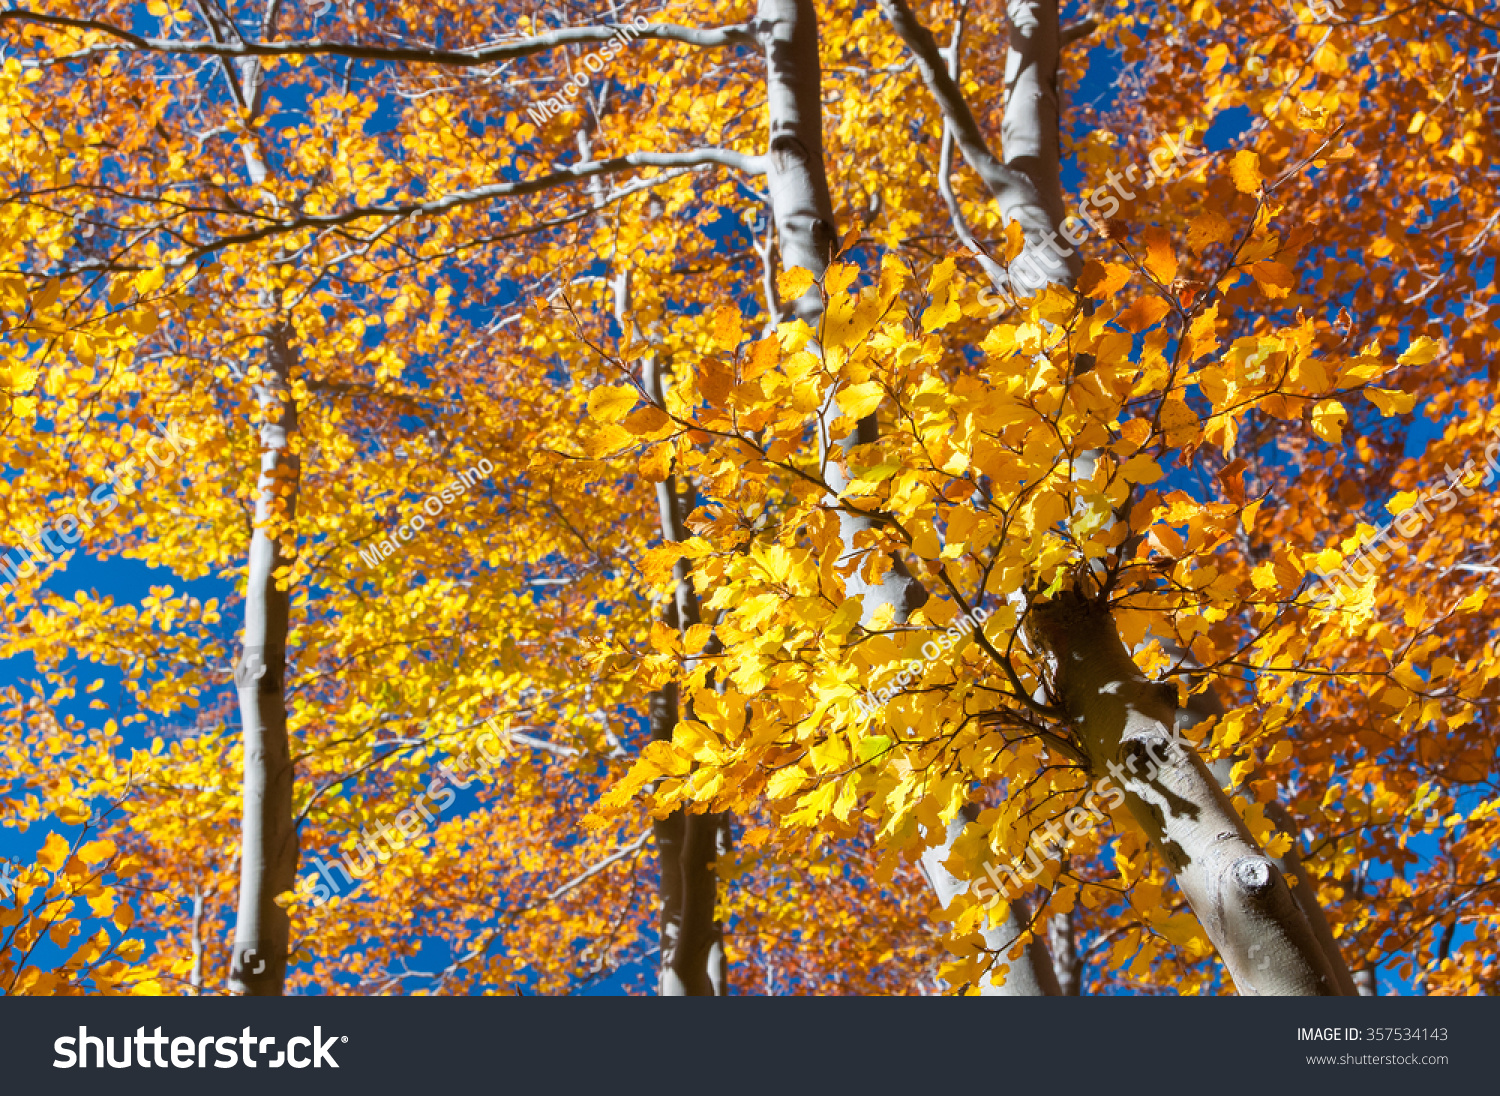 Beech tree leaves of Mount Etna during fall season #357534143